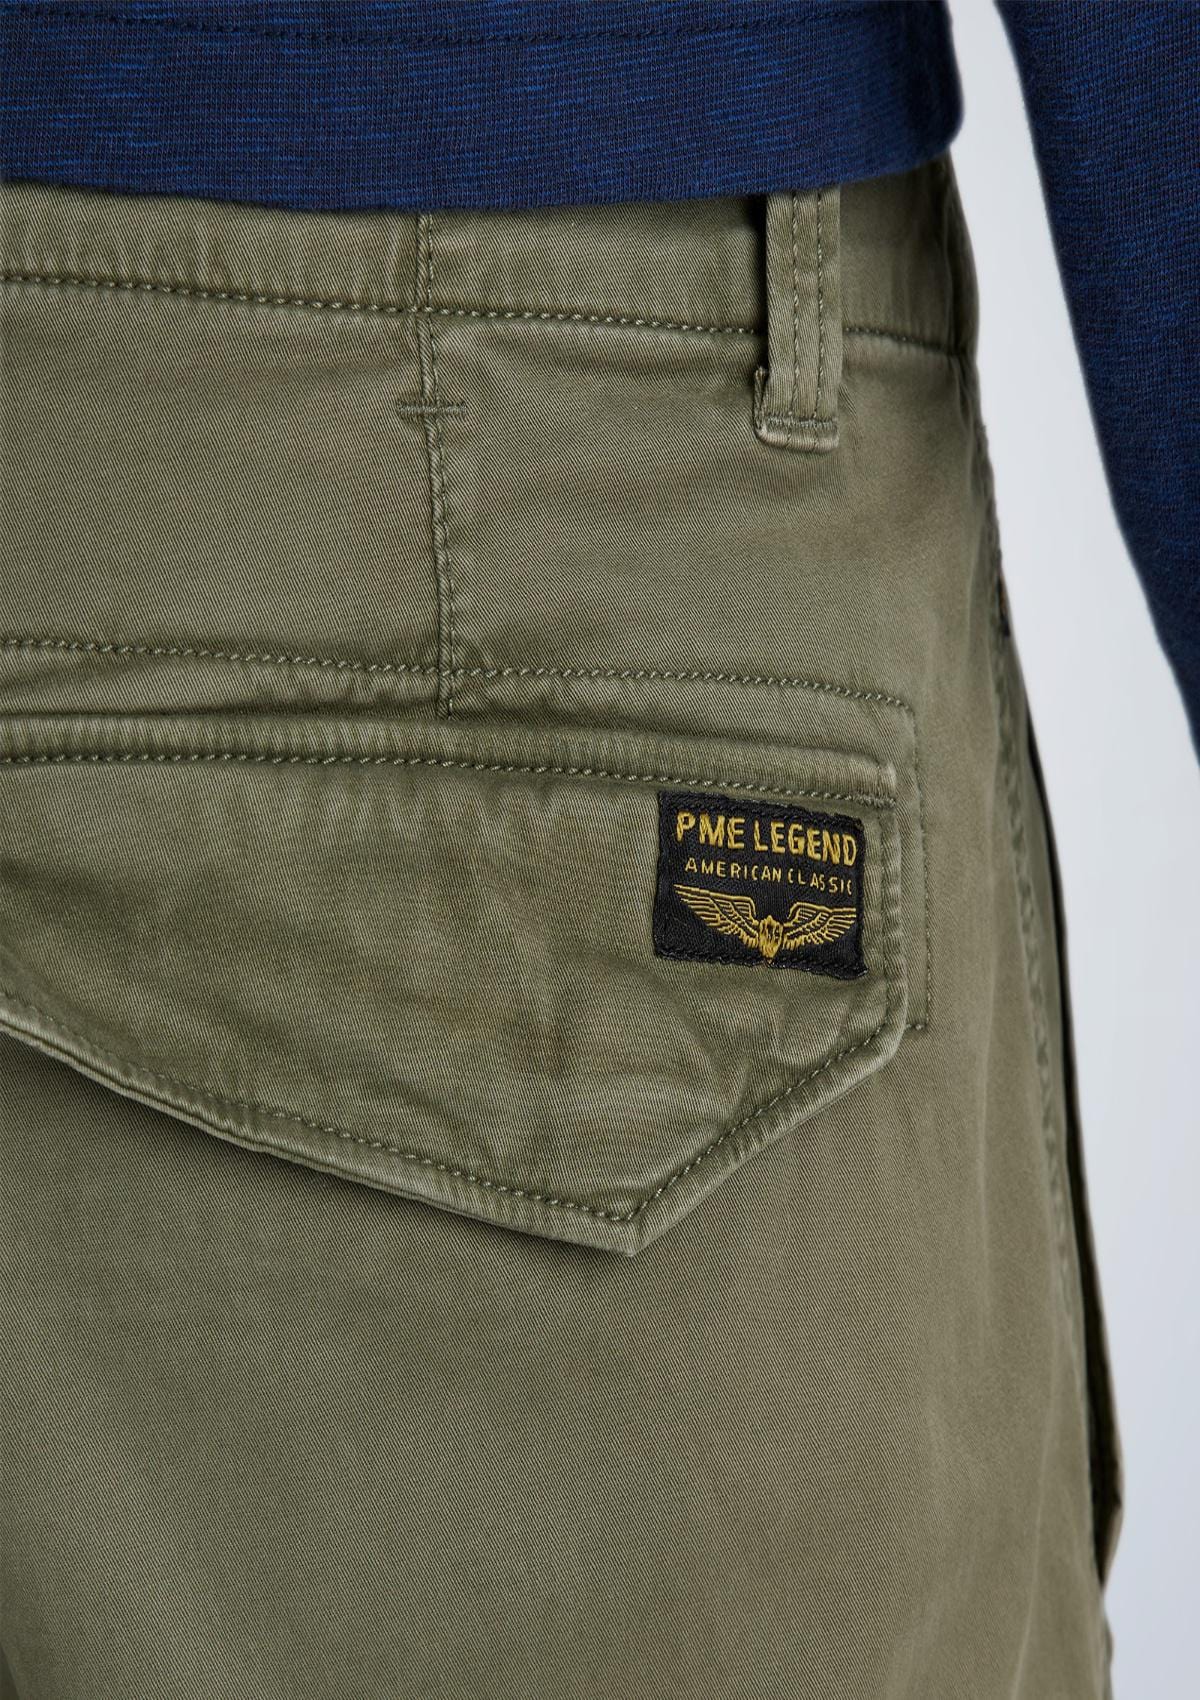 PME Legend Shopping Freizeithosen PANTS - – CARGO Jeans-Land TWILL Jeans-Land STRETCH CARGO Online